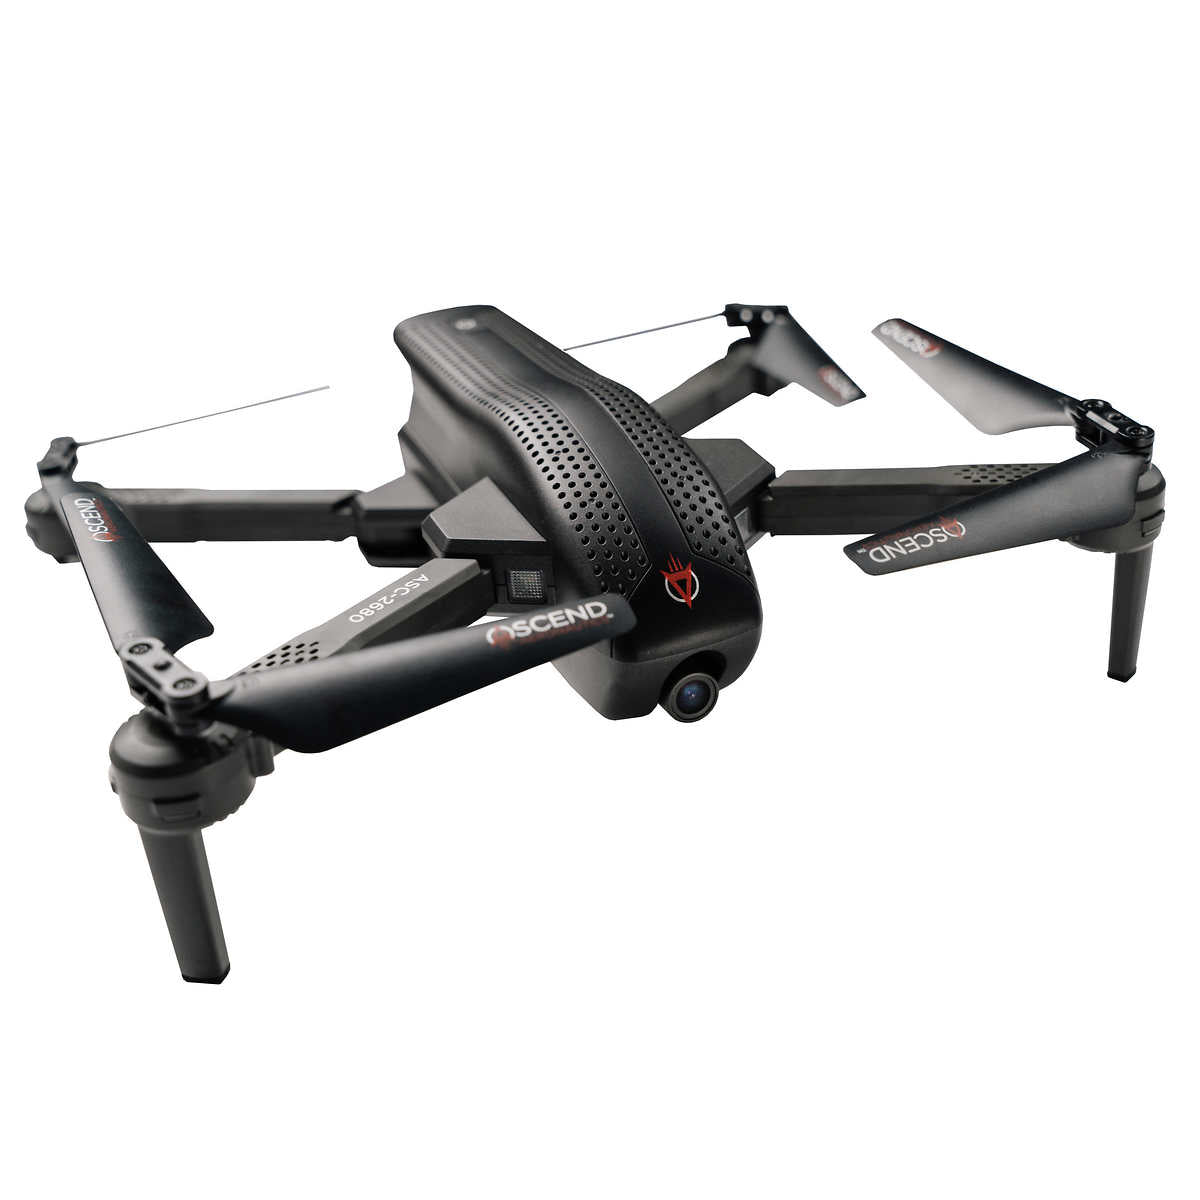 ASC-2680 Ascend Aeronautics Premium HD Video Drone with Optical Flow Technology